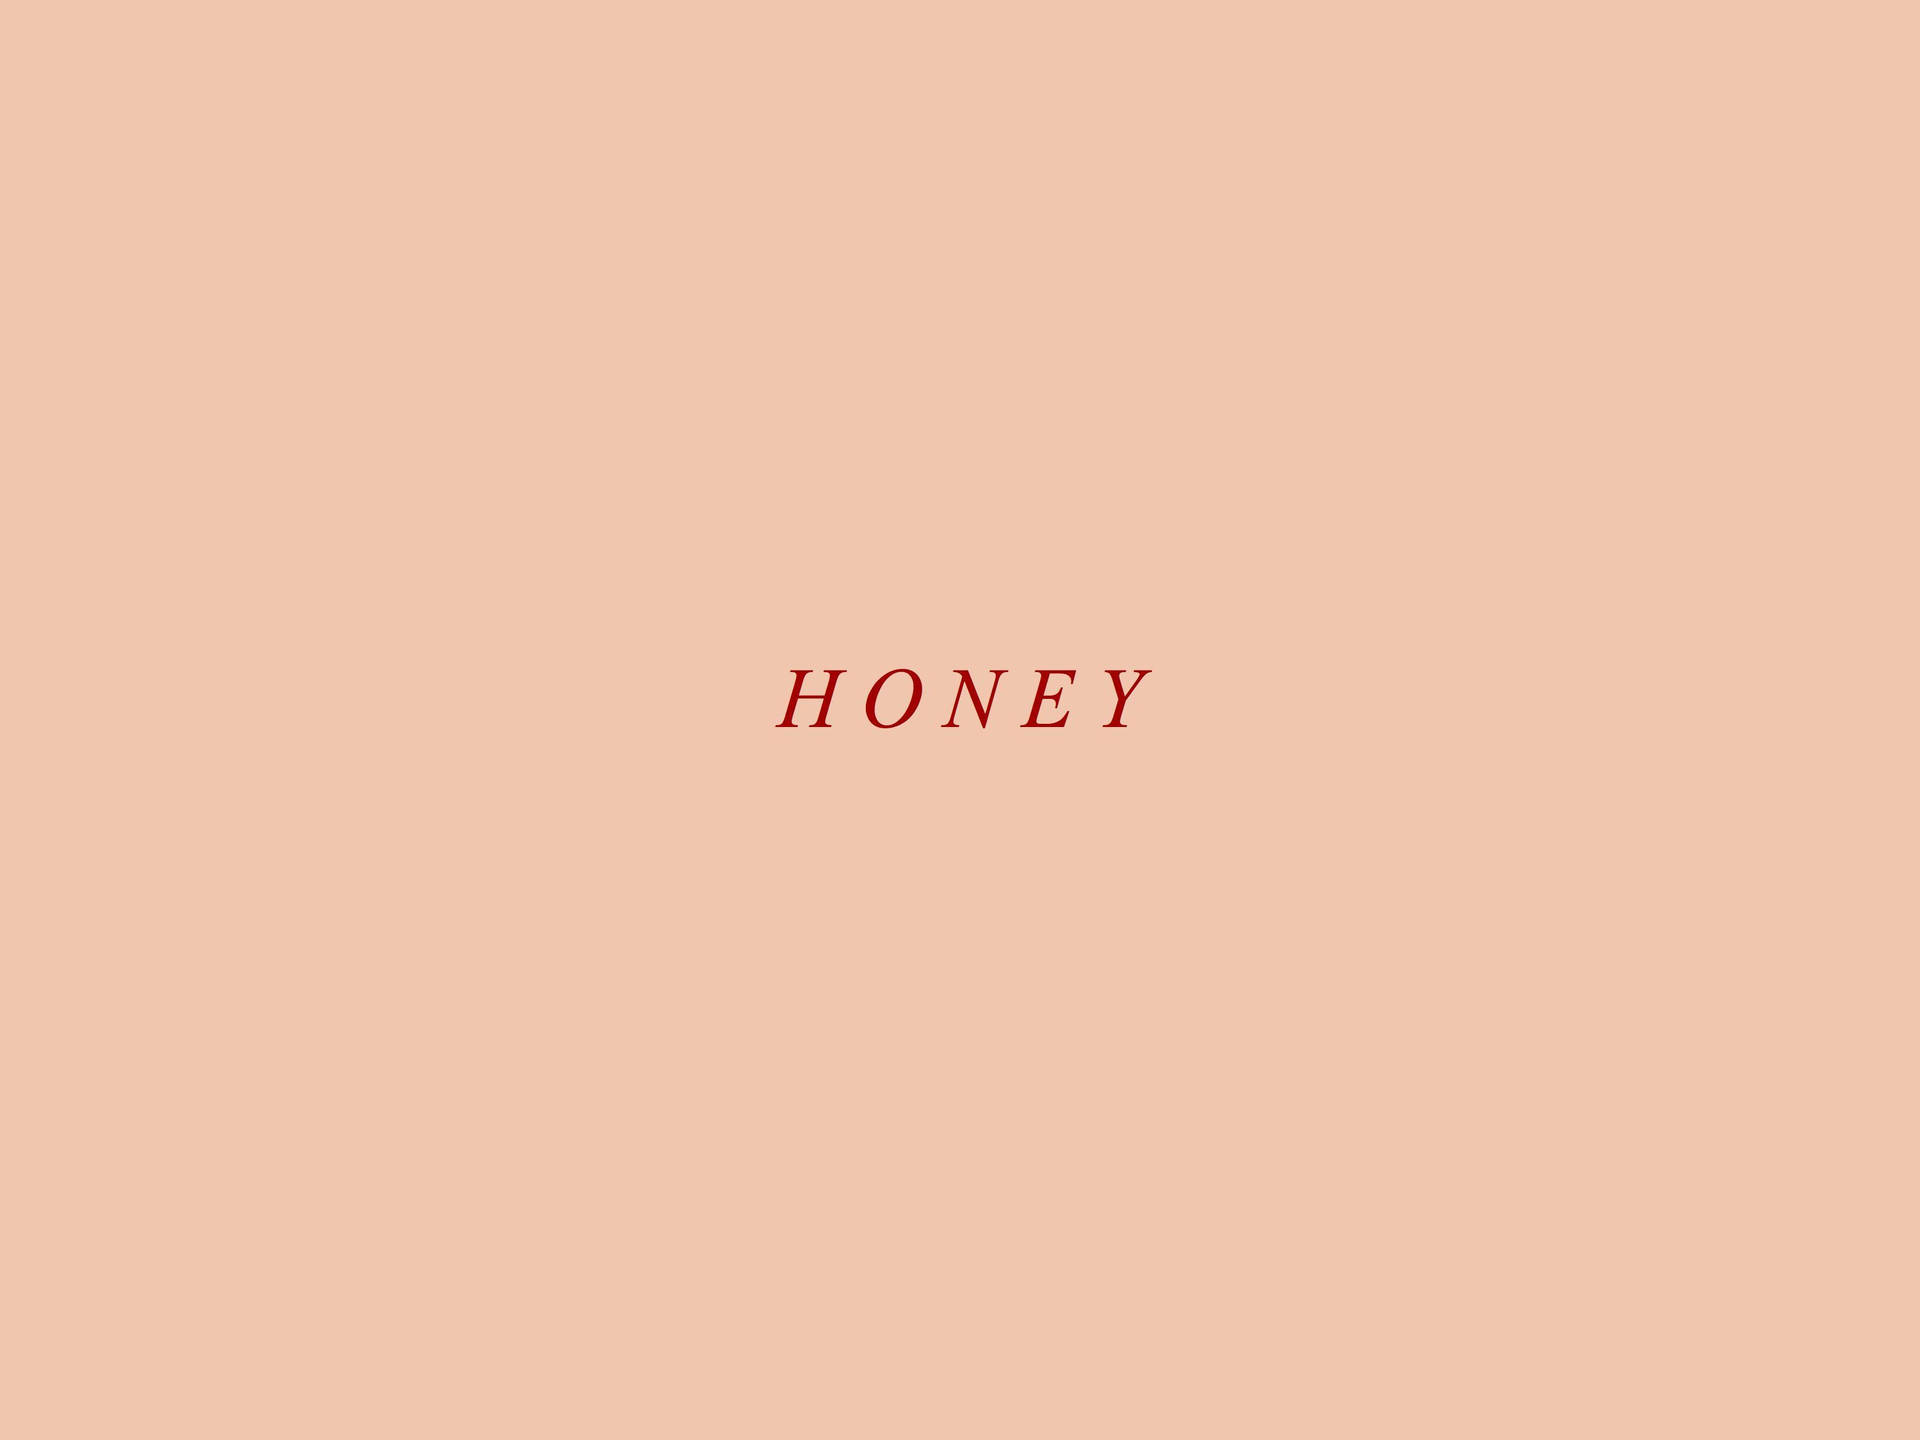 Minimalist Aesthetic Desktop Red Honey Word Background